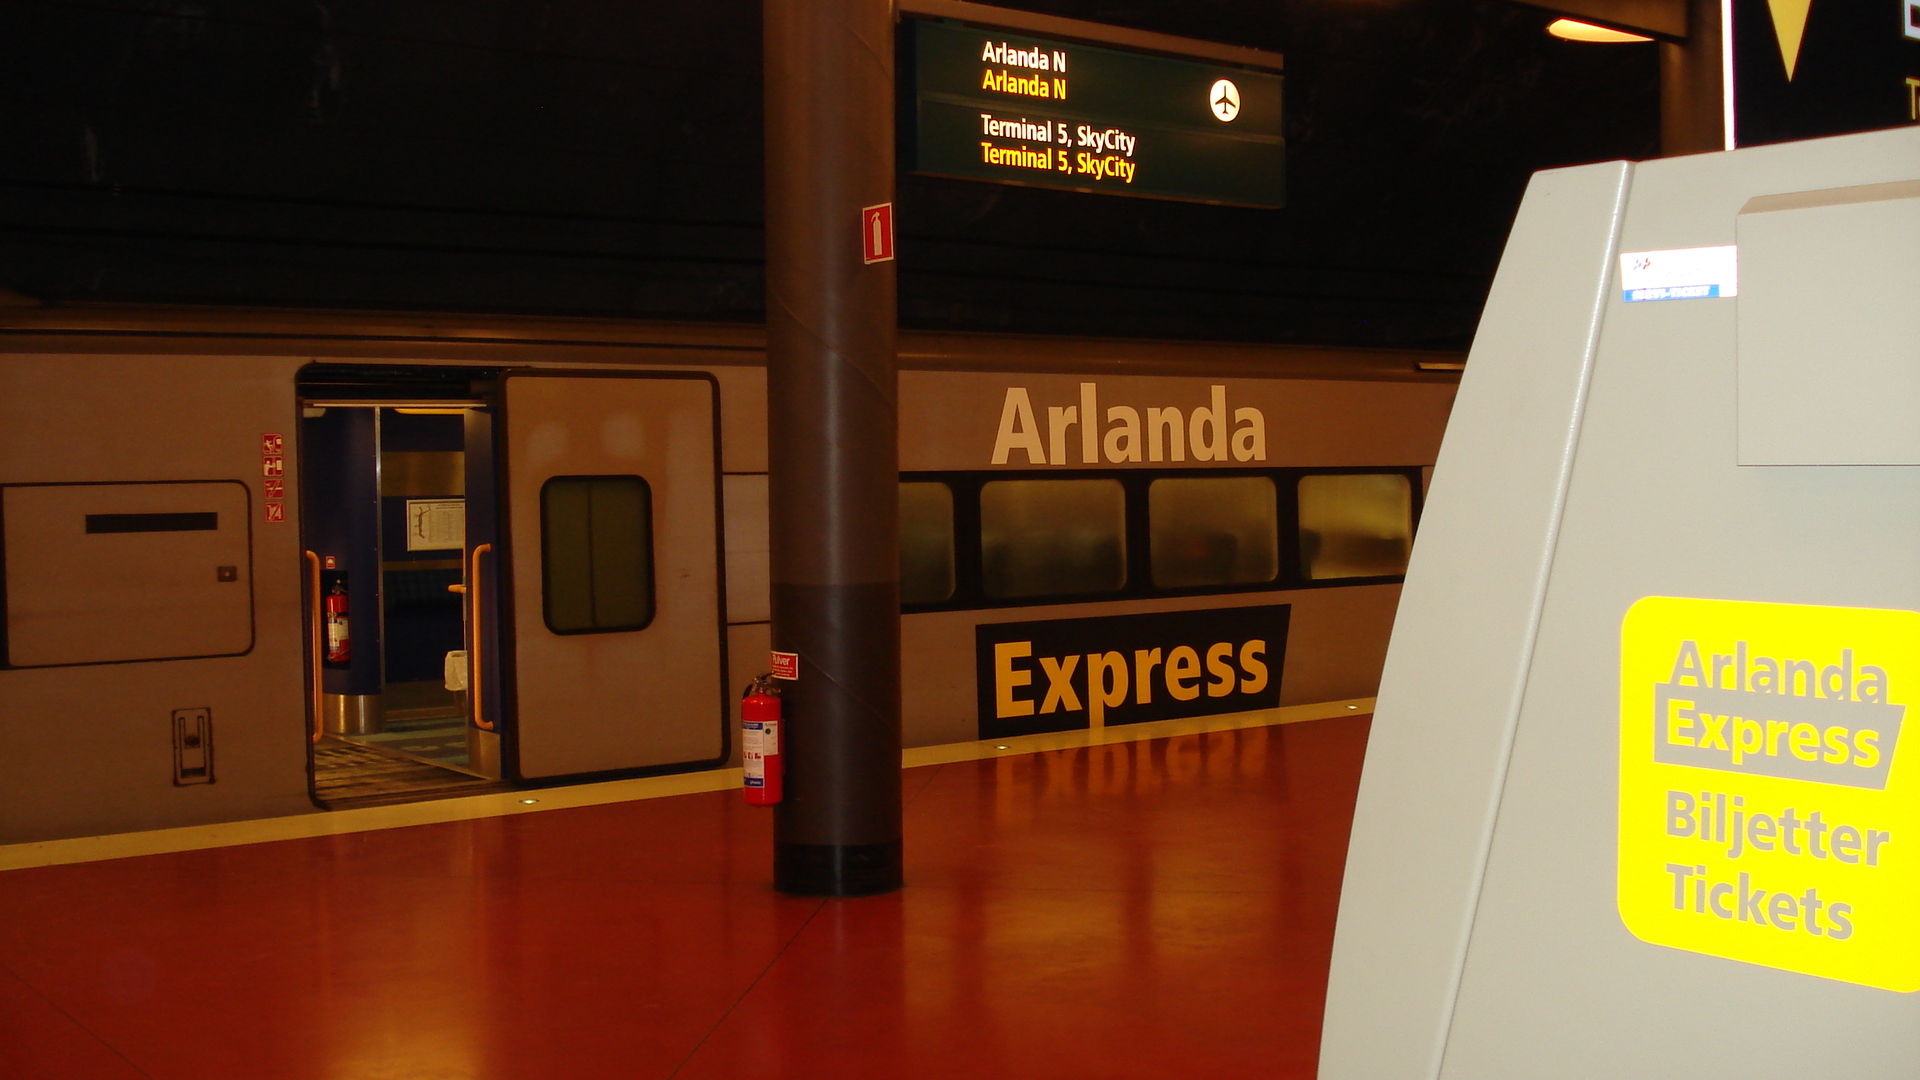 Arlanda North Station - Wikipedia